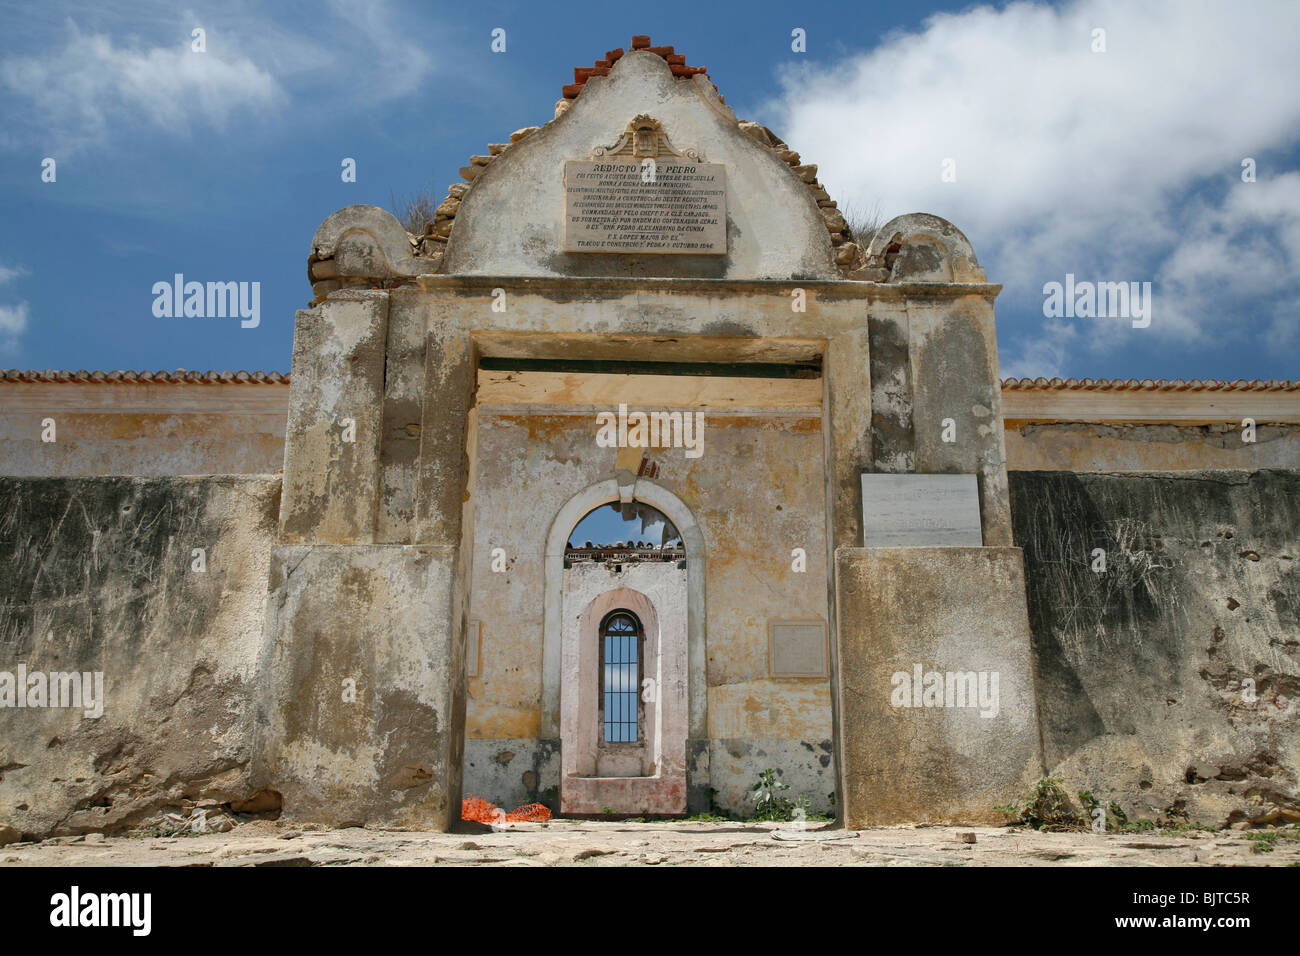 Reduto de Sao Pedro, a Portuguese fort built in 1847, Benguela, Angola. Africa. Stock Photo